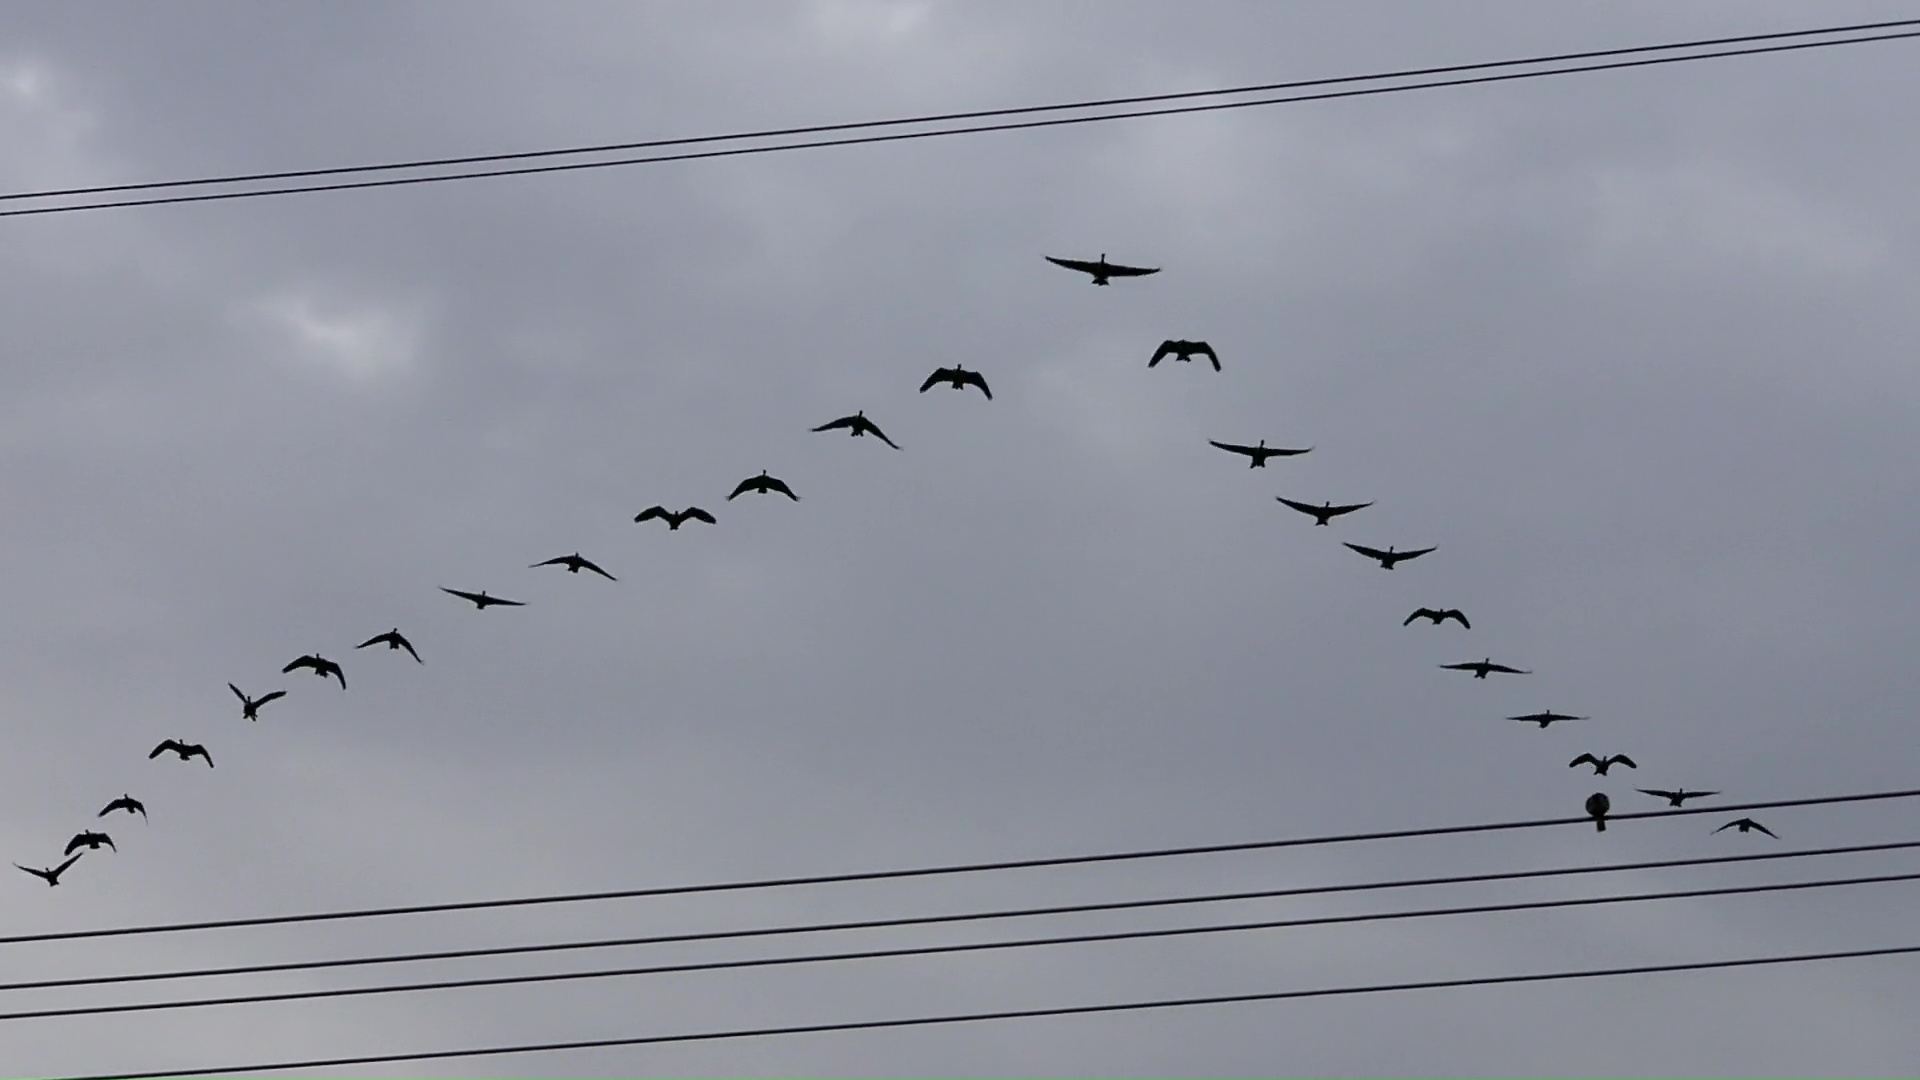 Geese in flight